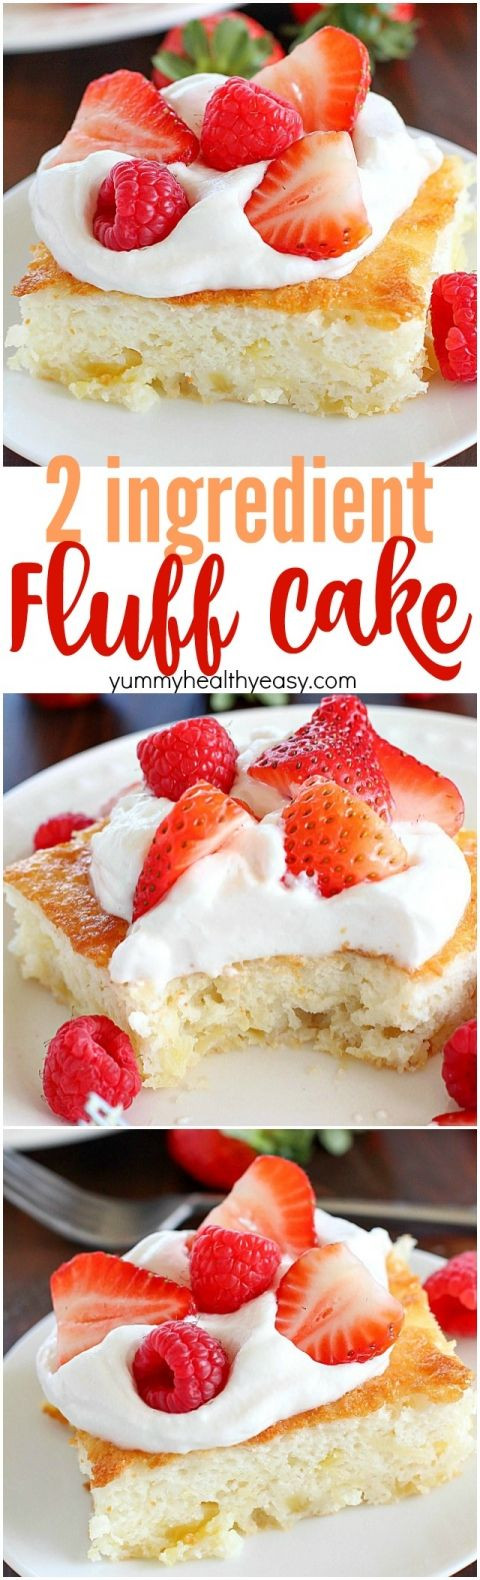 Low Calories Desserts
 Best 25 Low calorie cheesecake ideas on Pinterest